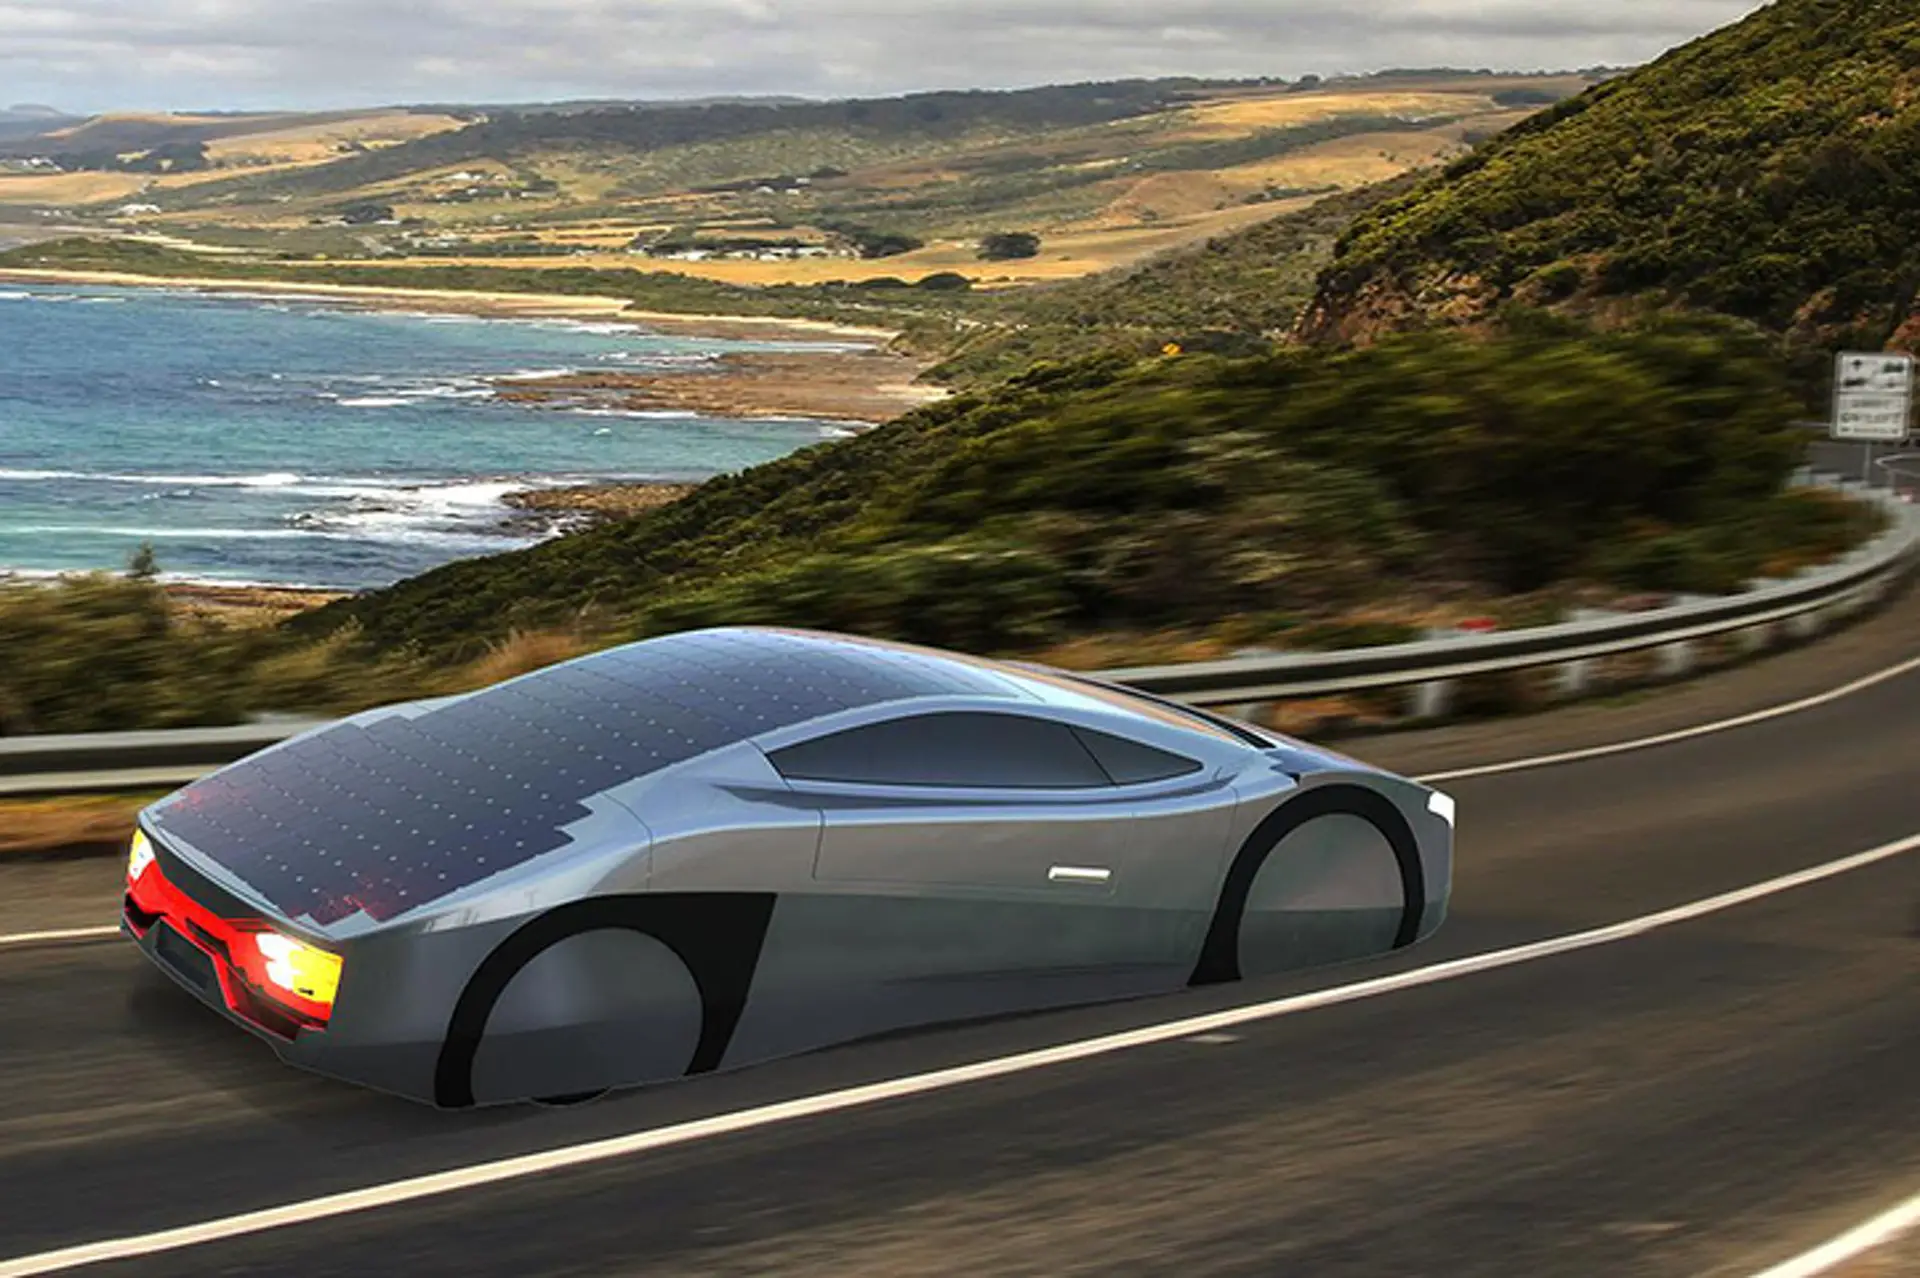 Solar Cars Celebrate 60 Years